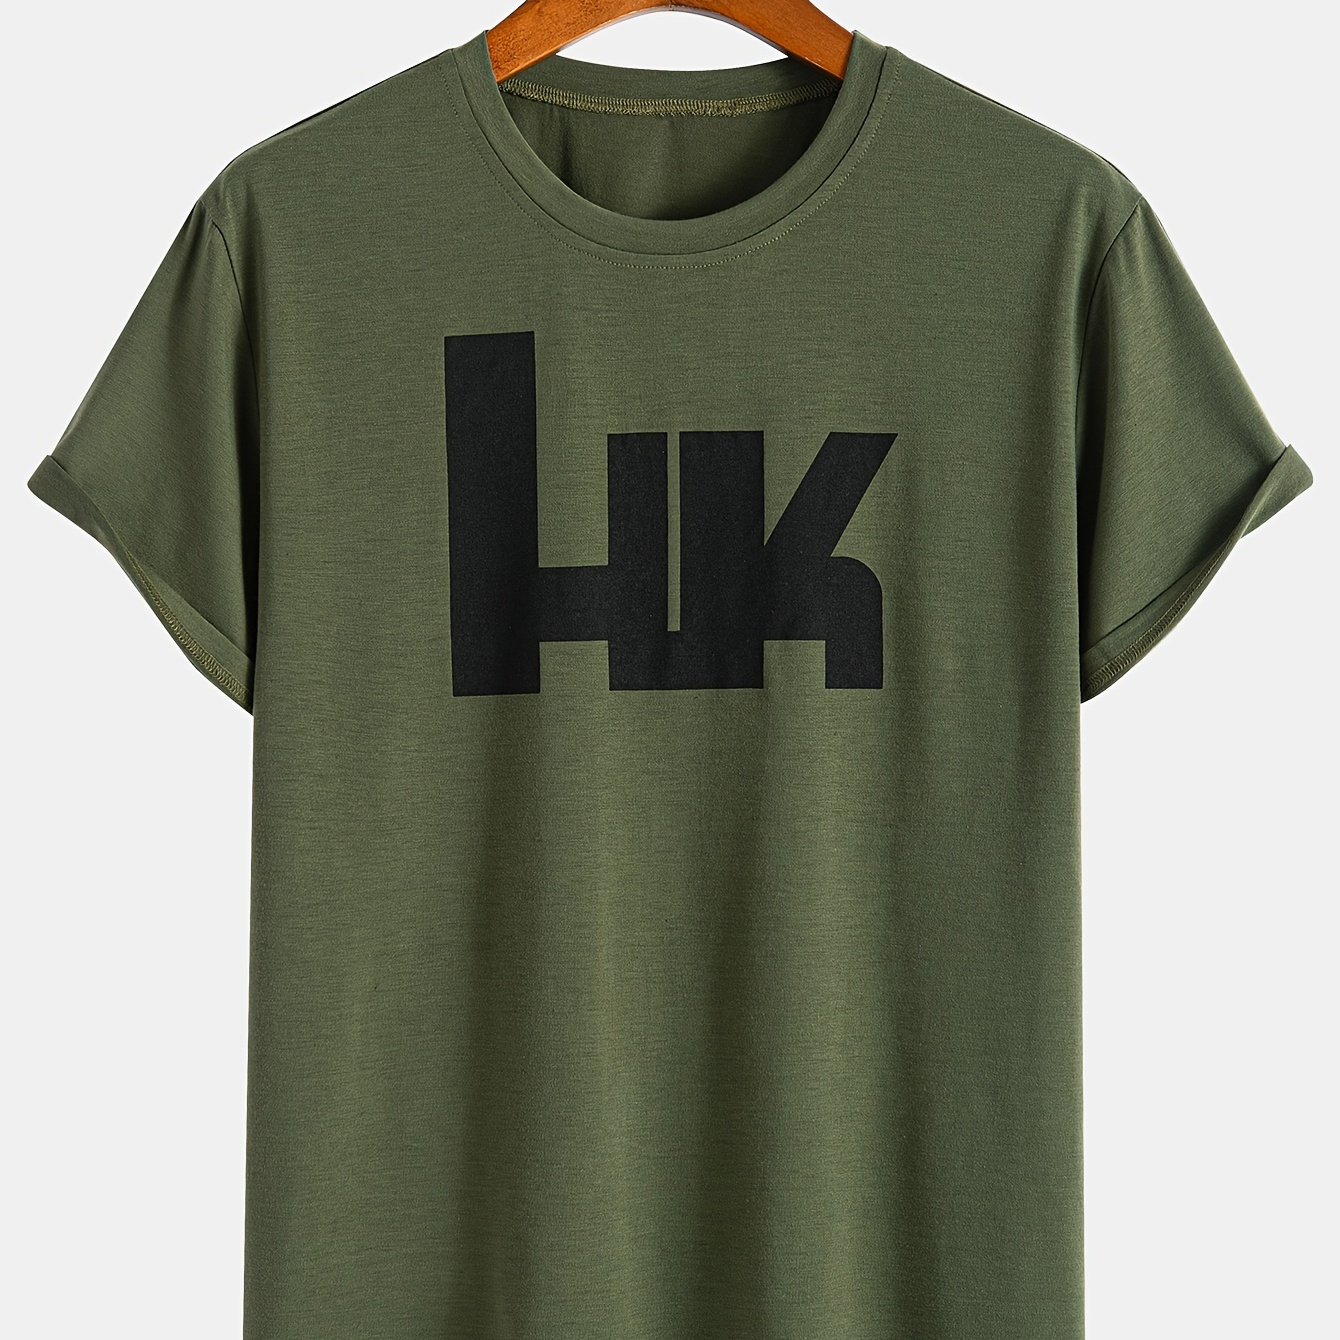 

Letter Hk Print Men's Fashion Short Sleeve Crew Neck T-shirt, Summer Outdoor